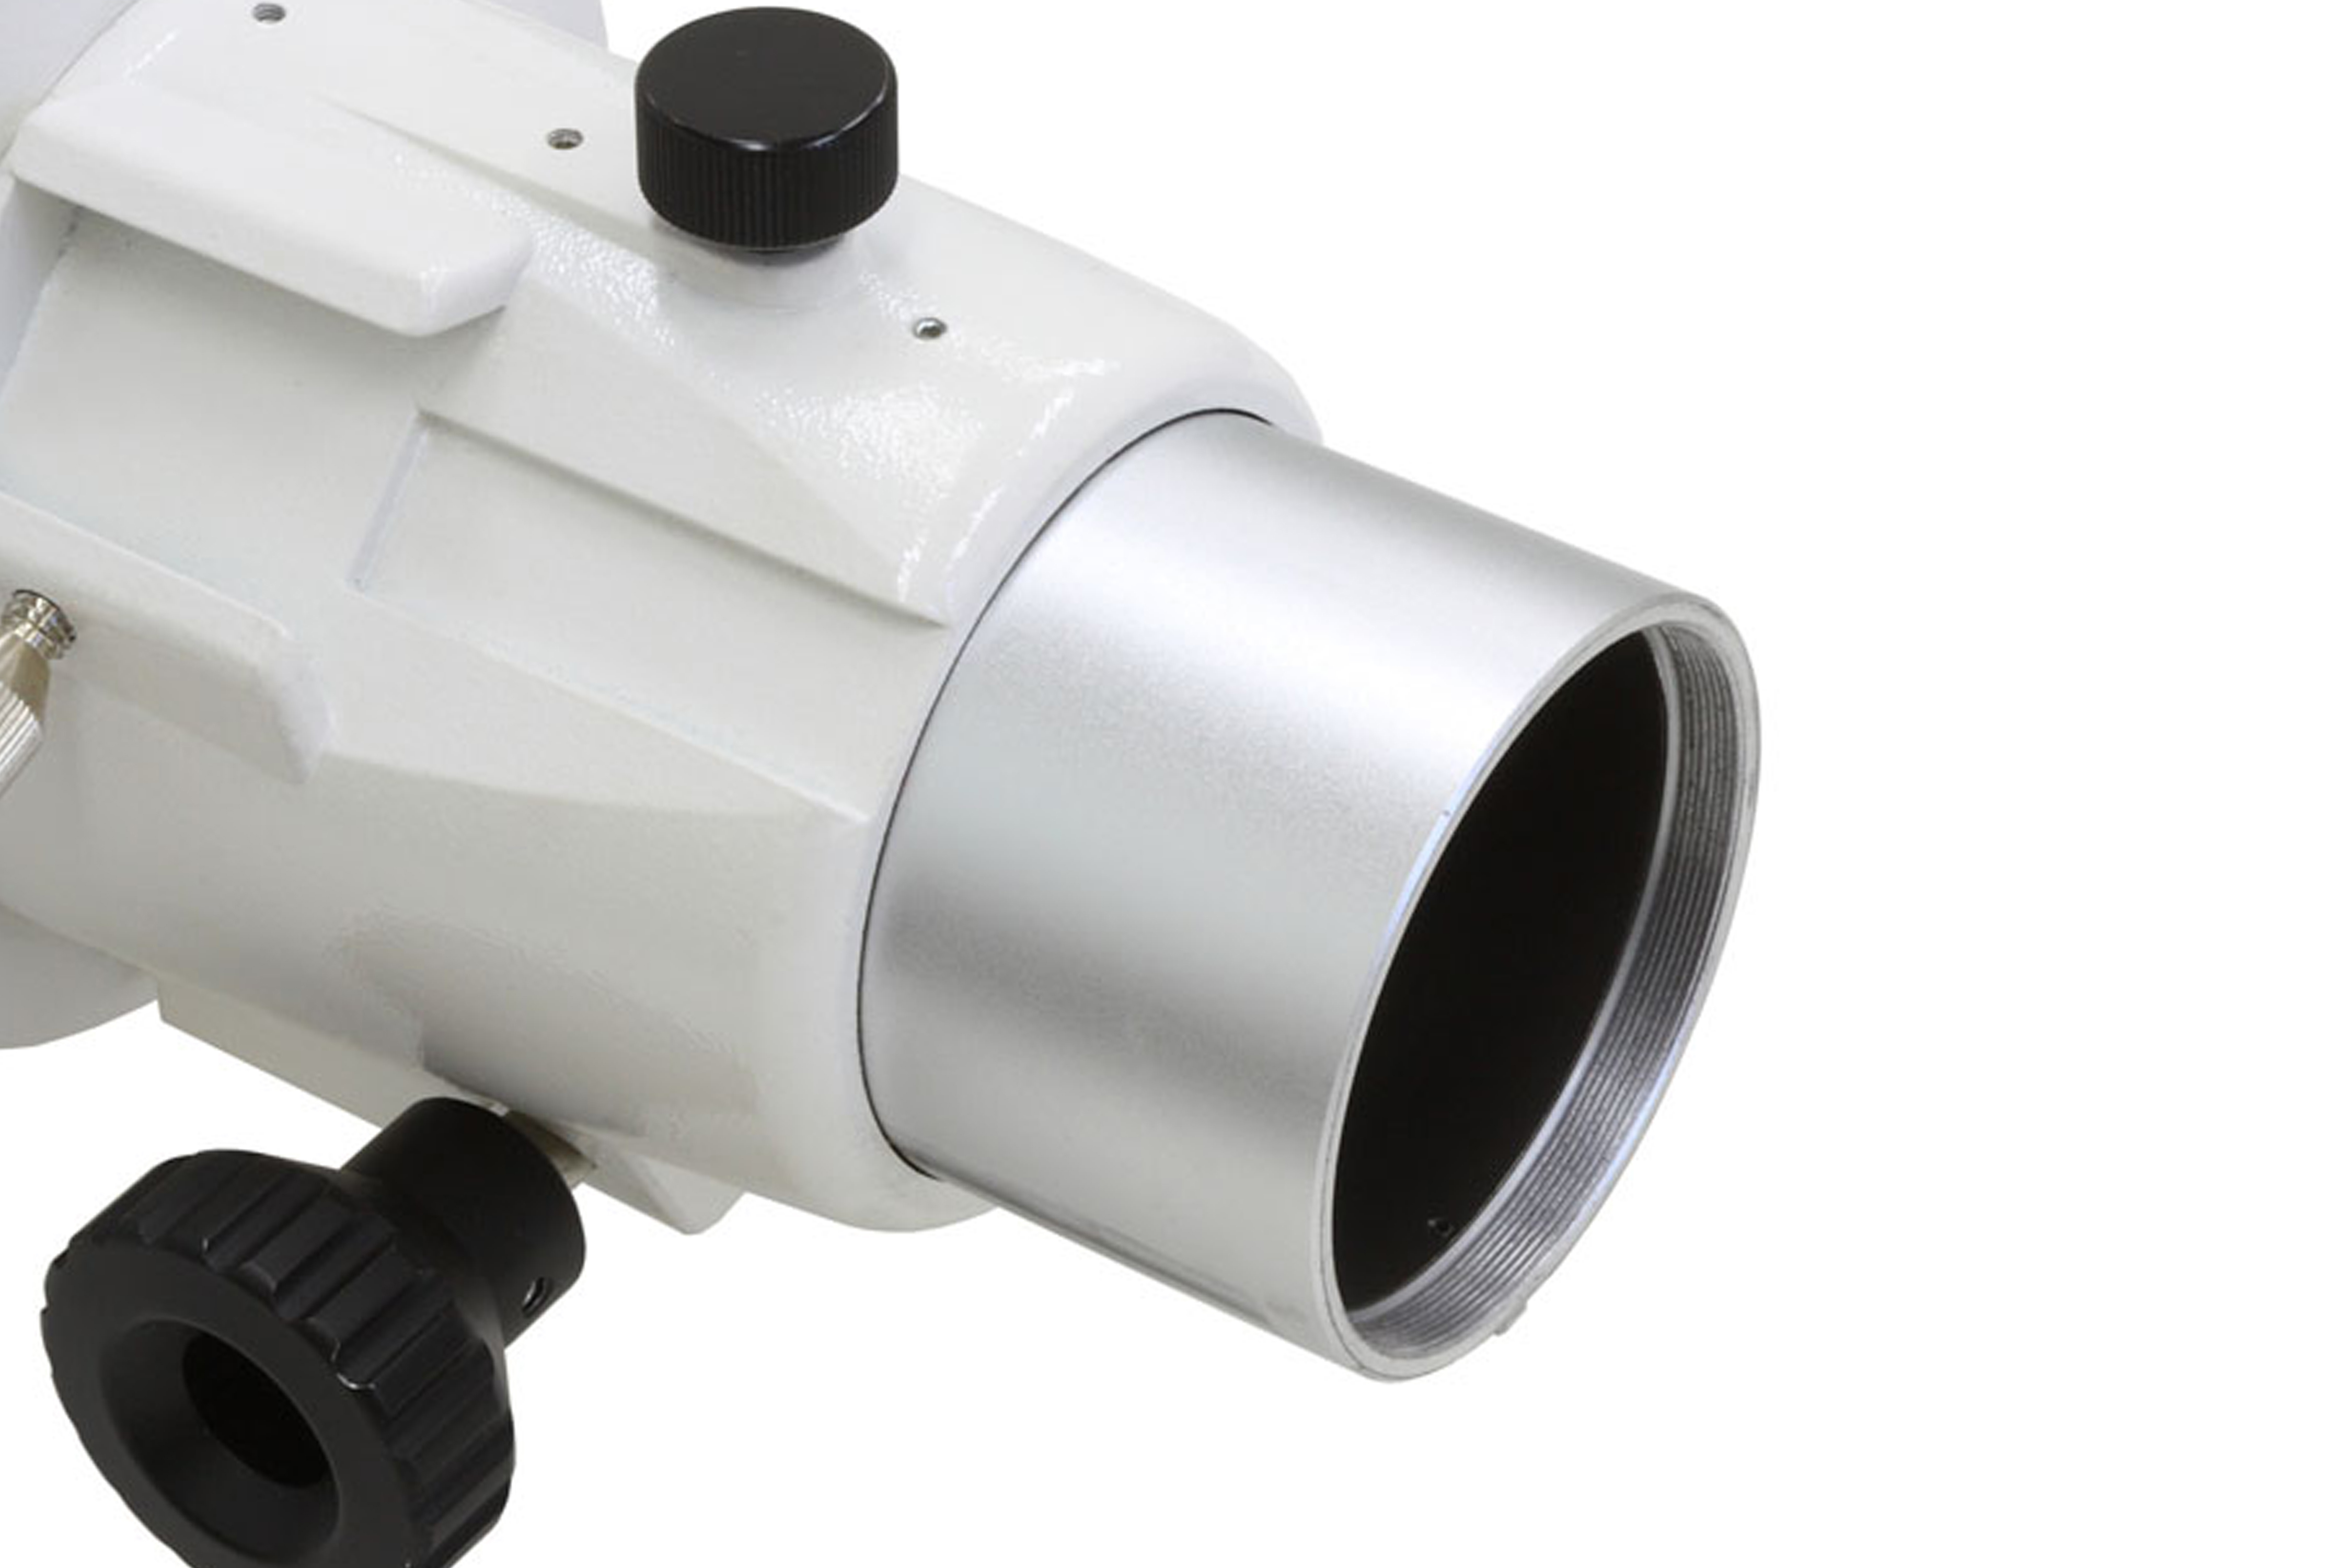 Vixen A105MII achromatic refractor - optical tube assembly